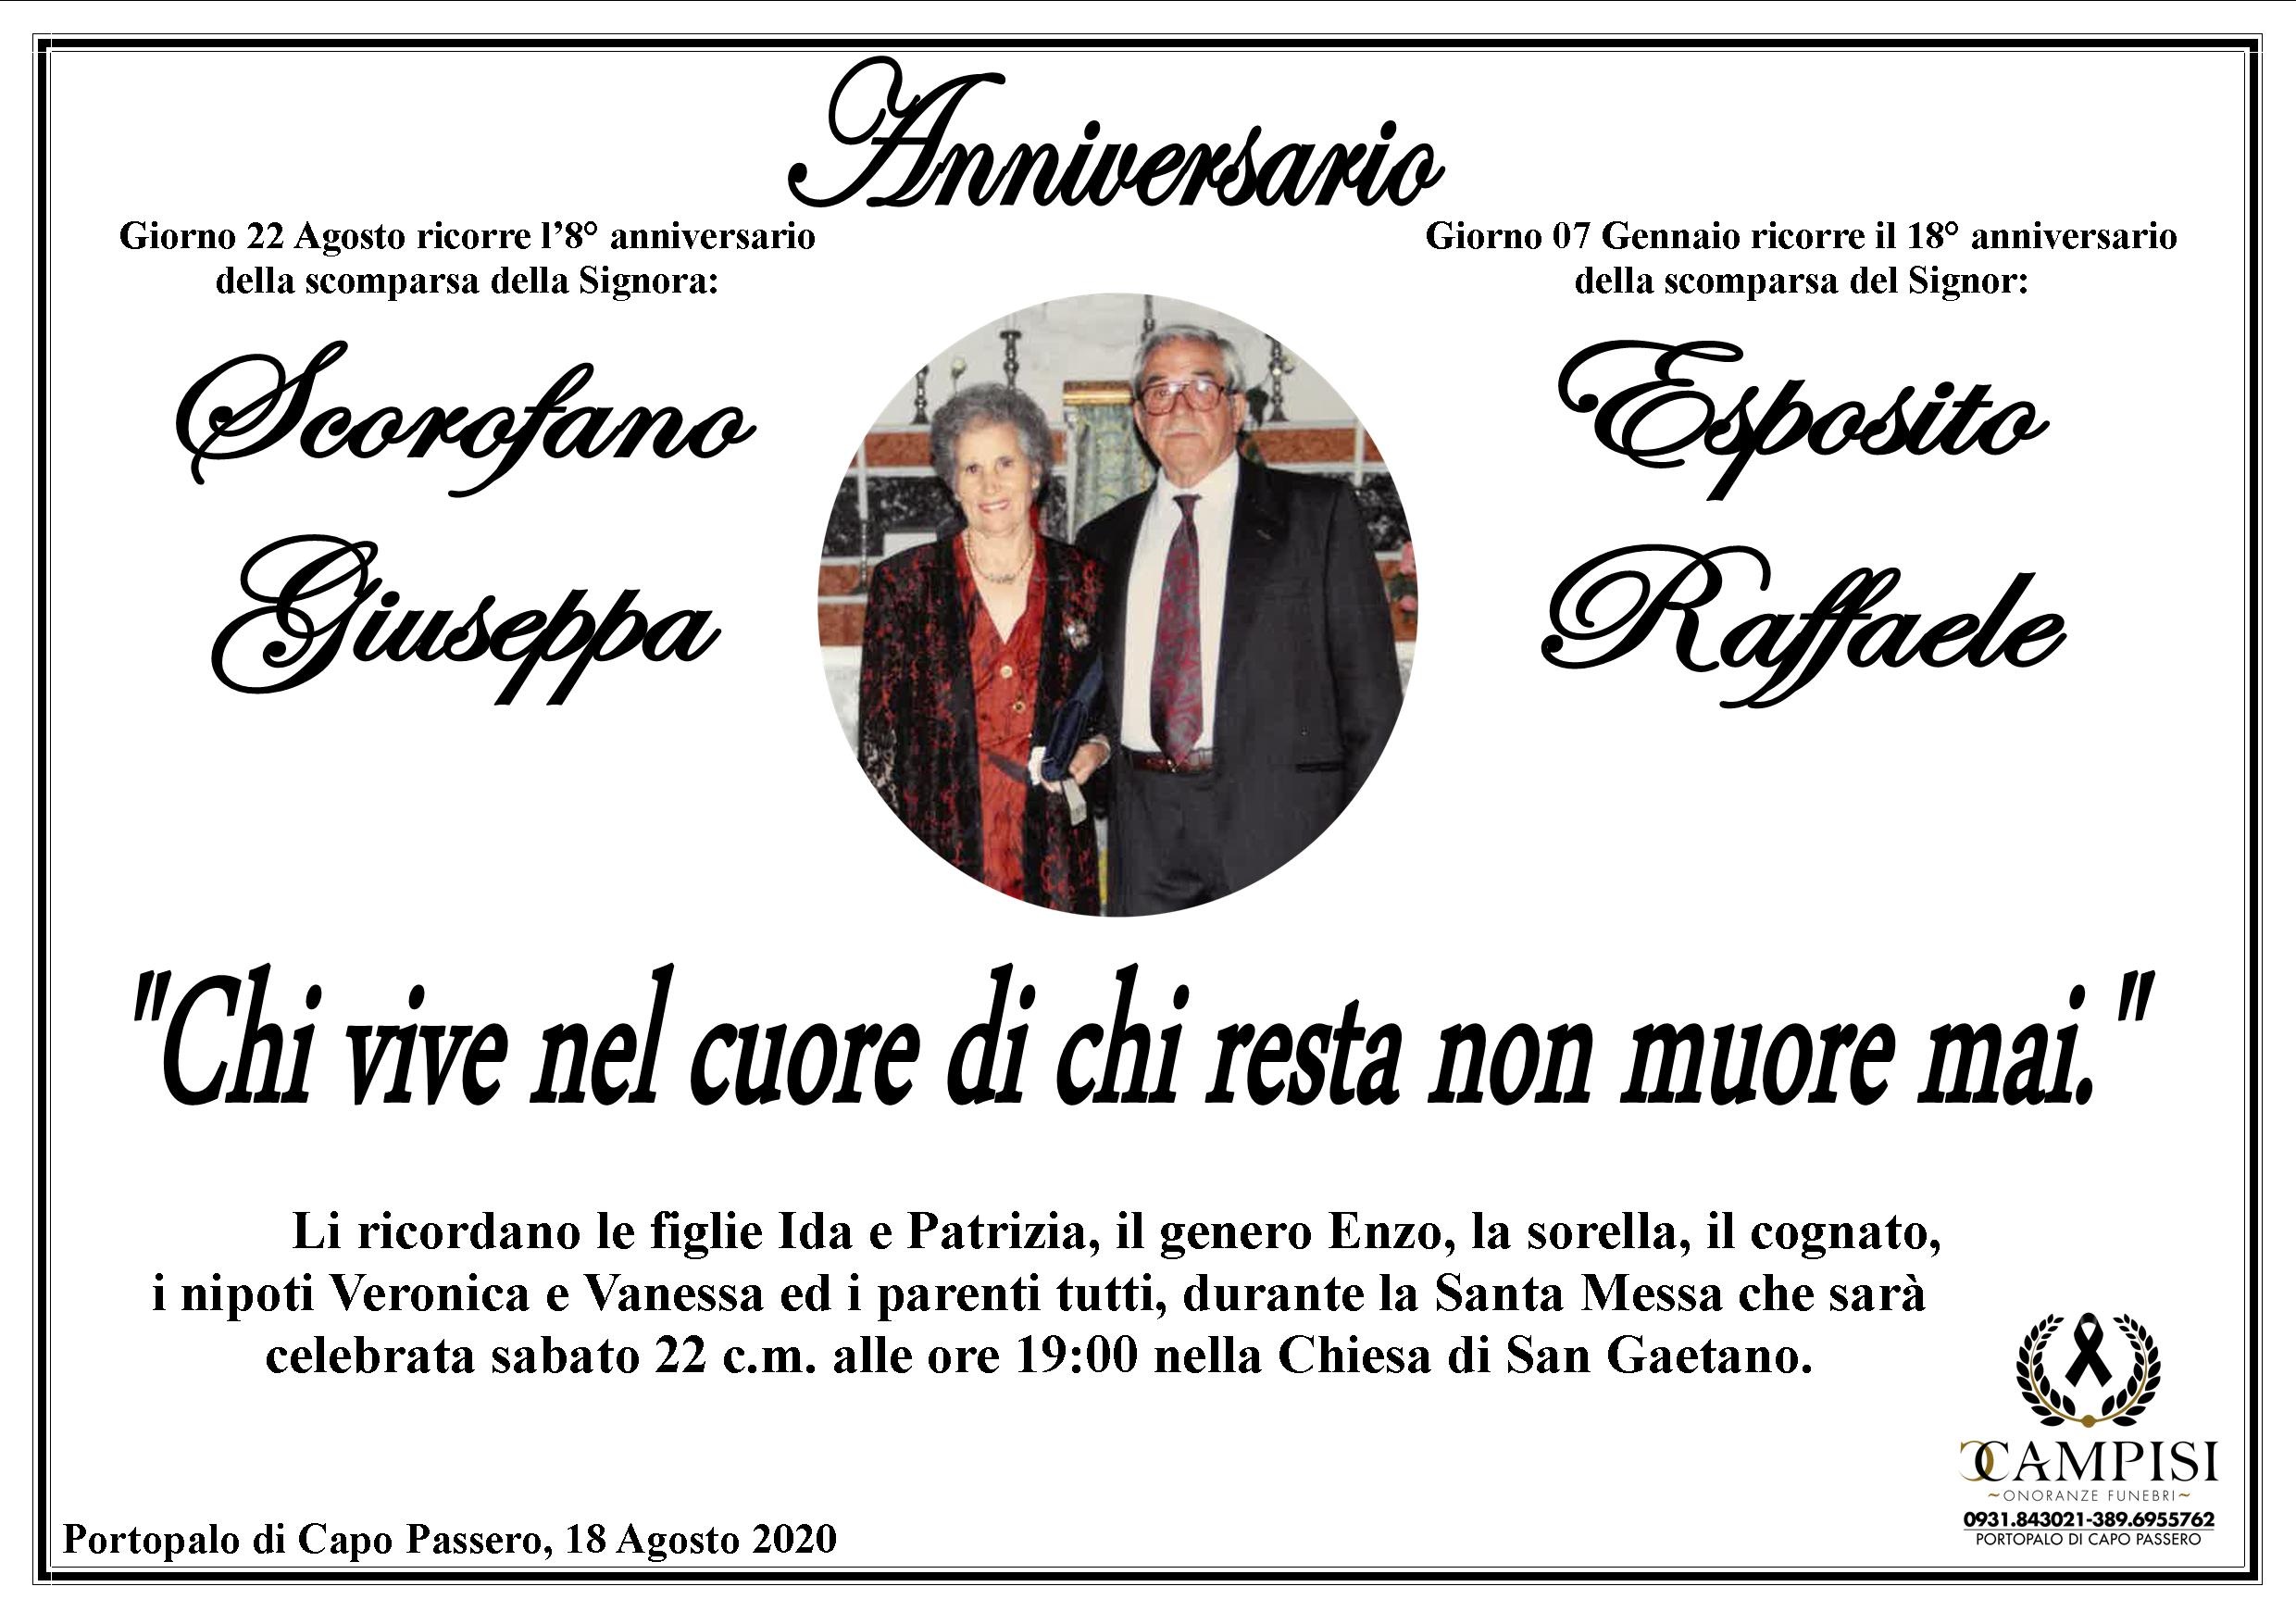 Coniugi Esposito Raffaele - Scrofano Giuseppa